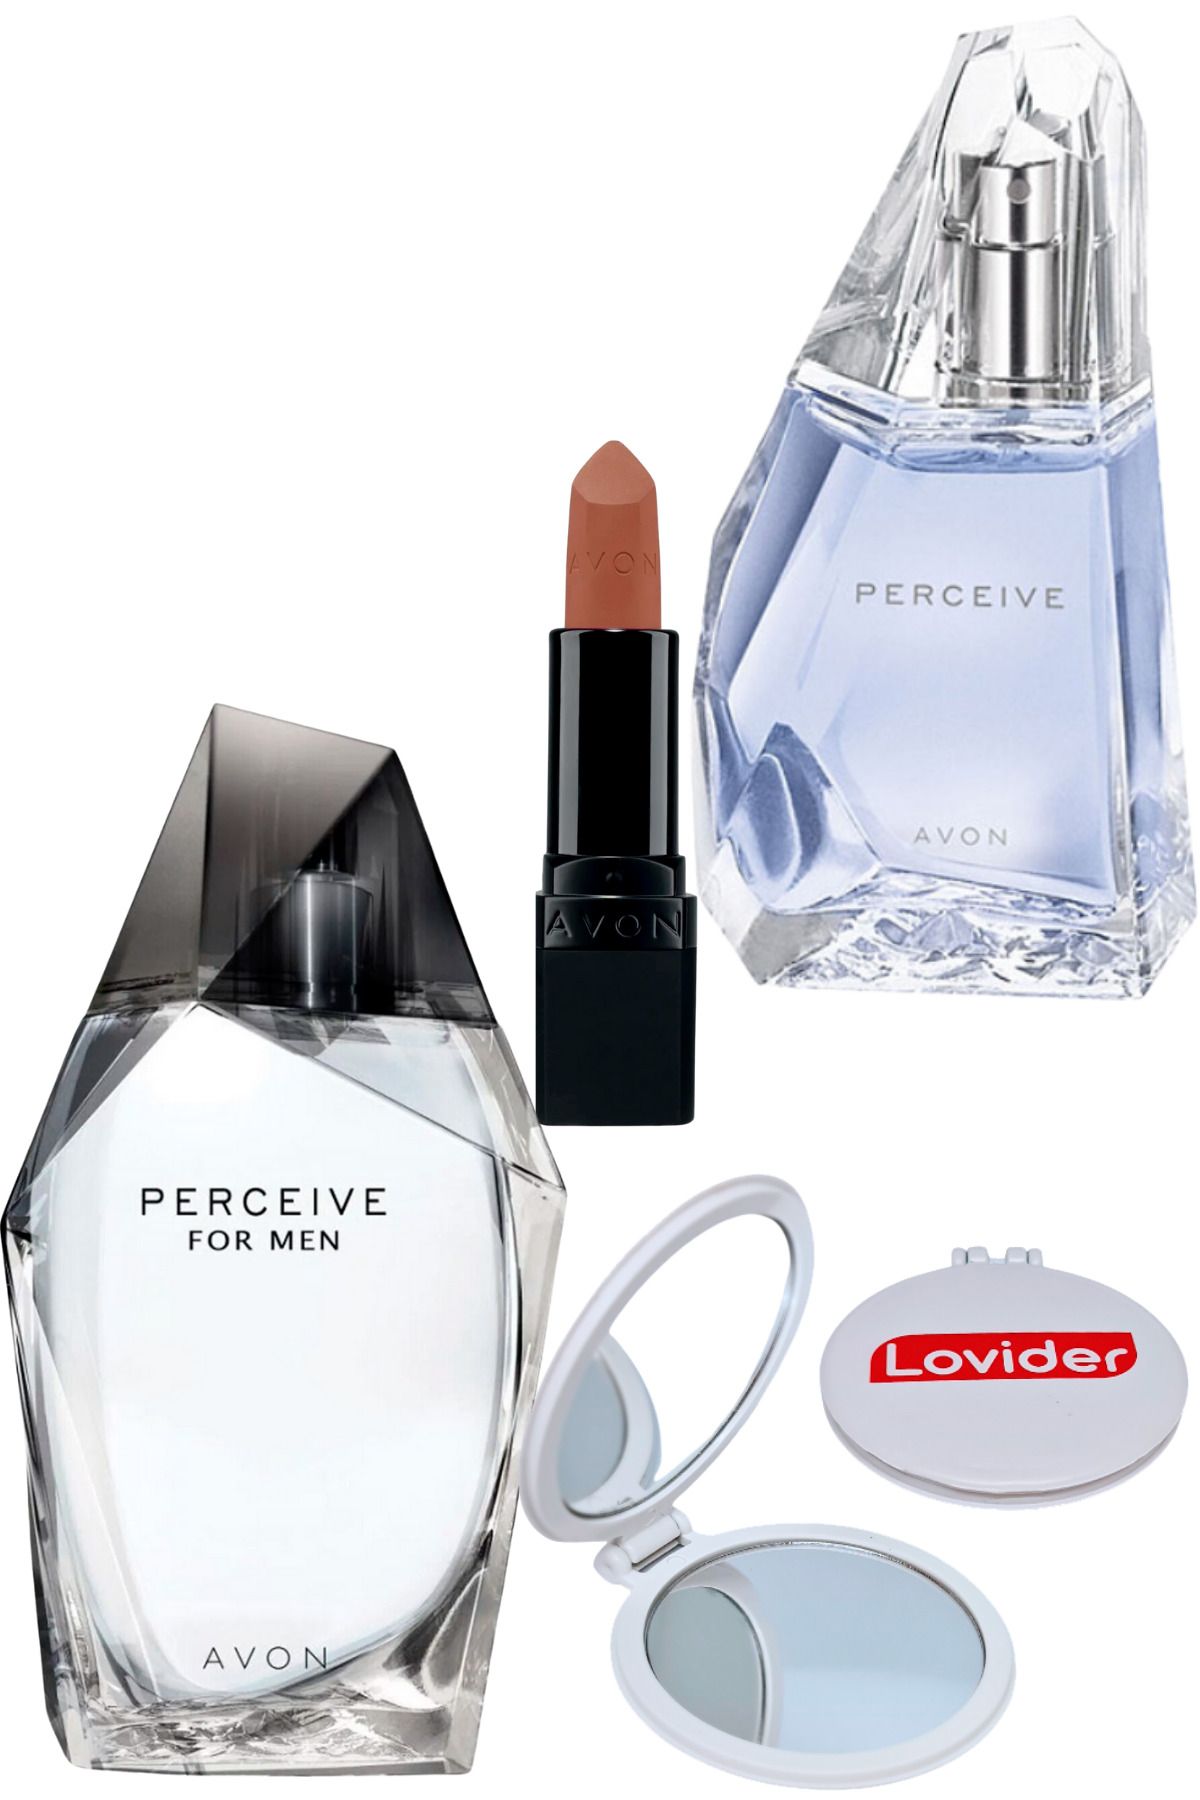 Avon Perceive Erkek Parfüm + Perceive Kadın Parfüm + Mat Ruj Marvellous Mocha + Lovider Cep Aynası Hediye